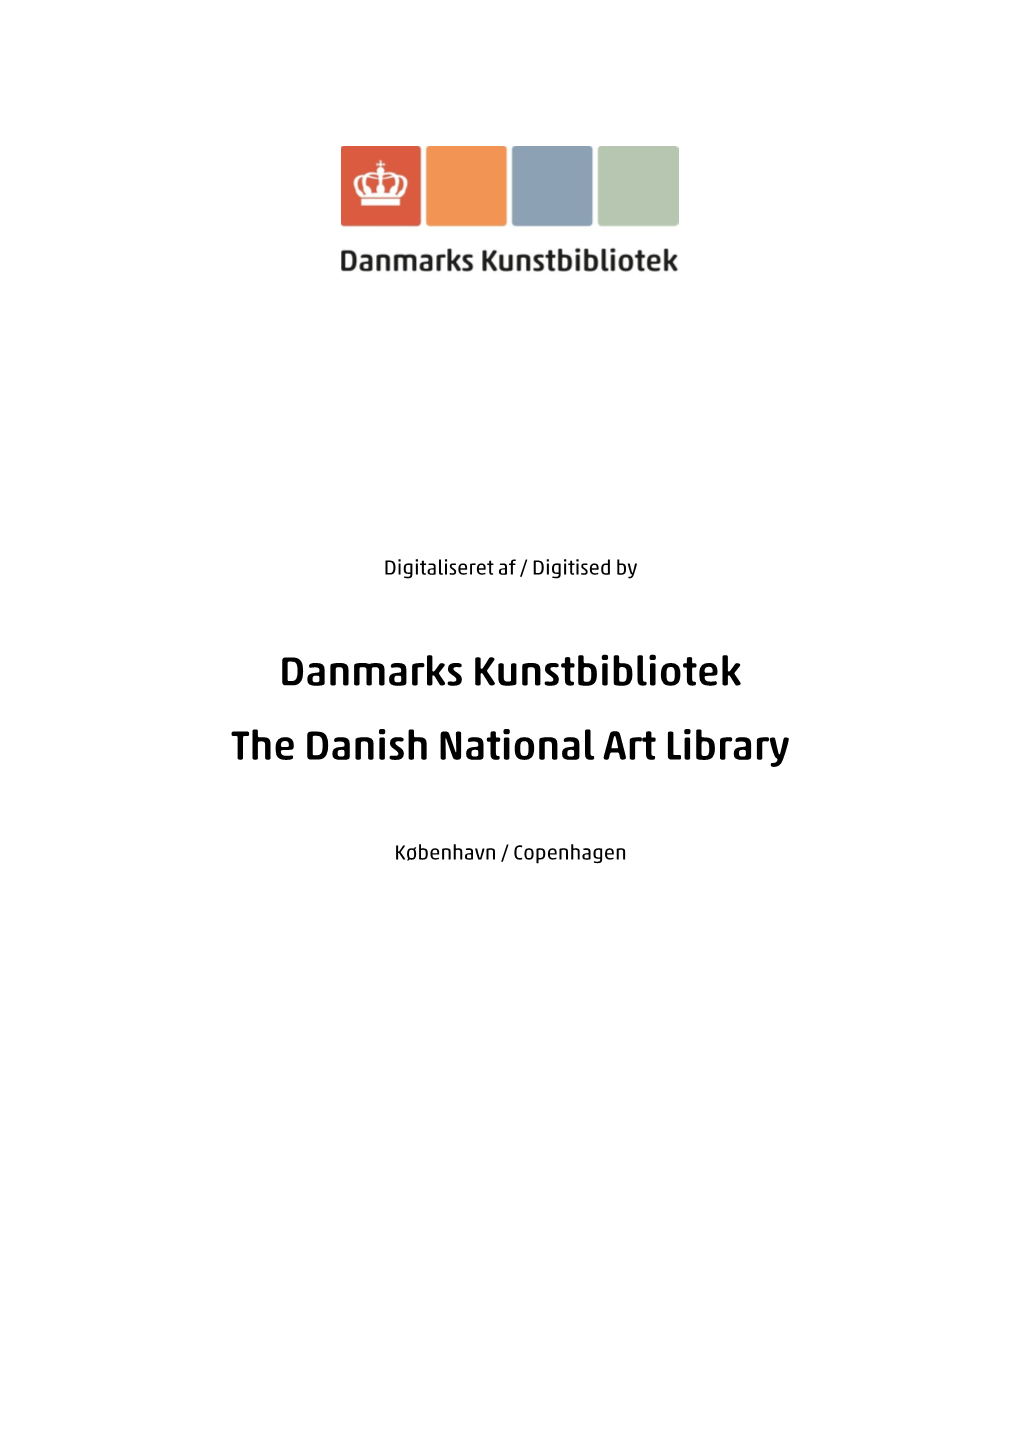 Danmarks Kunstbibliotek the Danish National Art Library